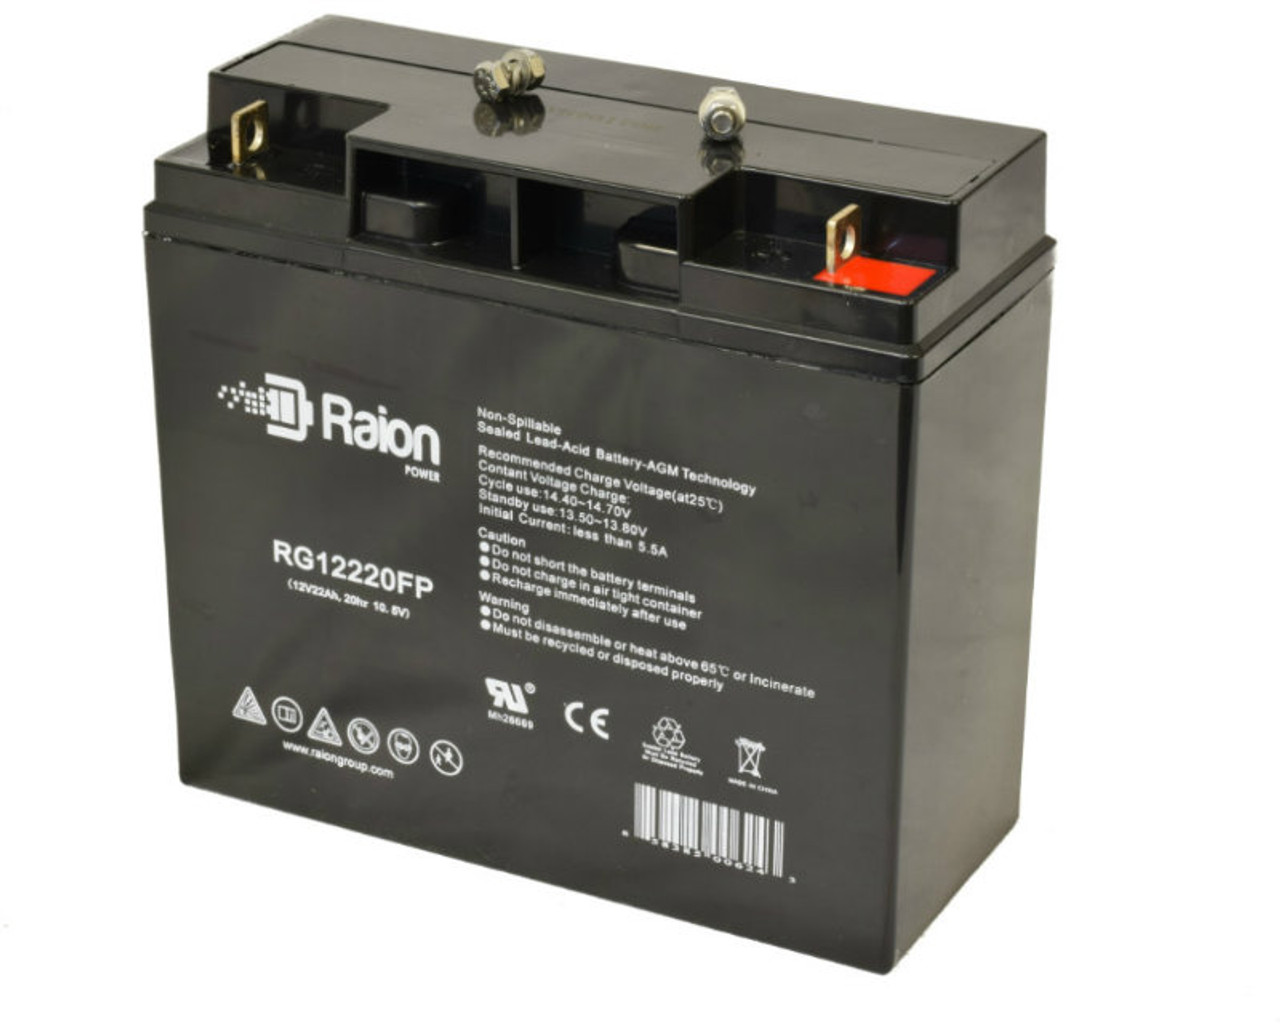 Raion Power RG12220FP 12V 22Ah Lead Acid Battery for Diehard 71988 Jump Starter